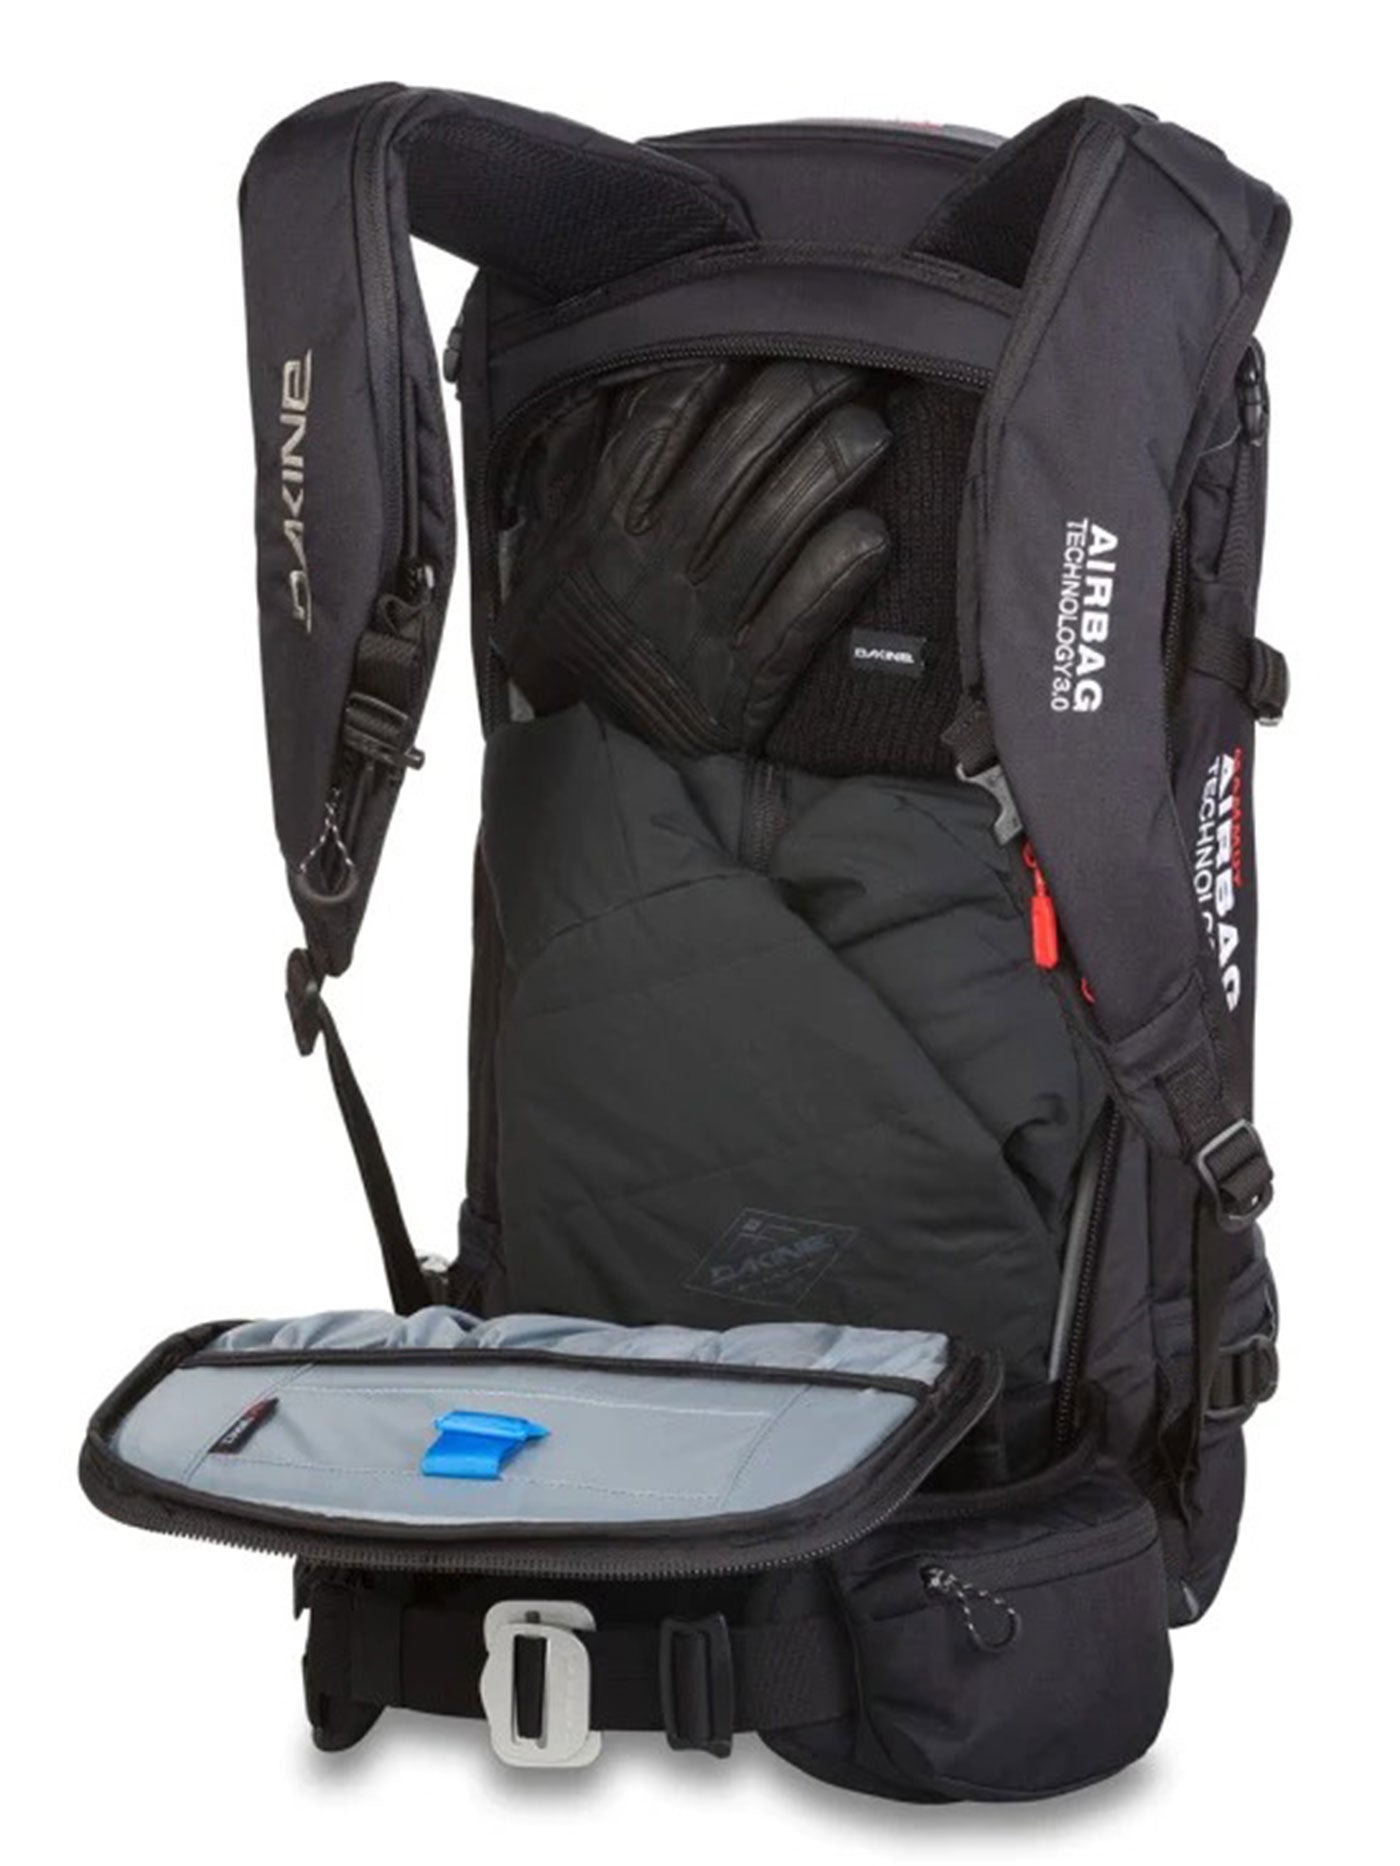 Dakine Poacher RAS 26L Snowboard Backpack